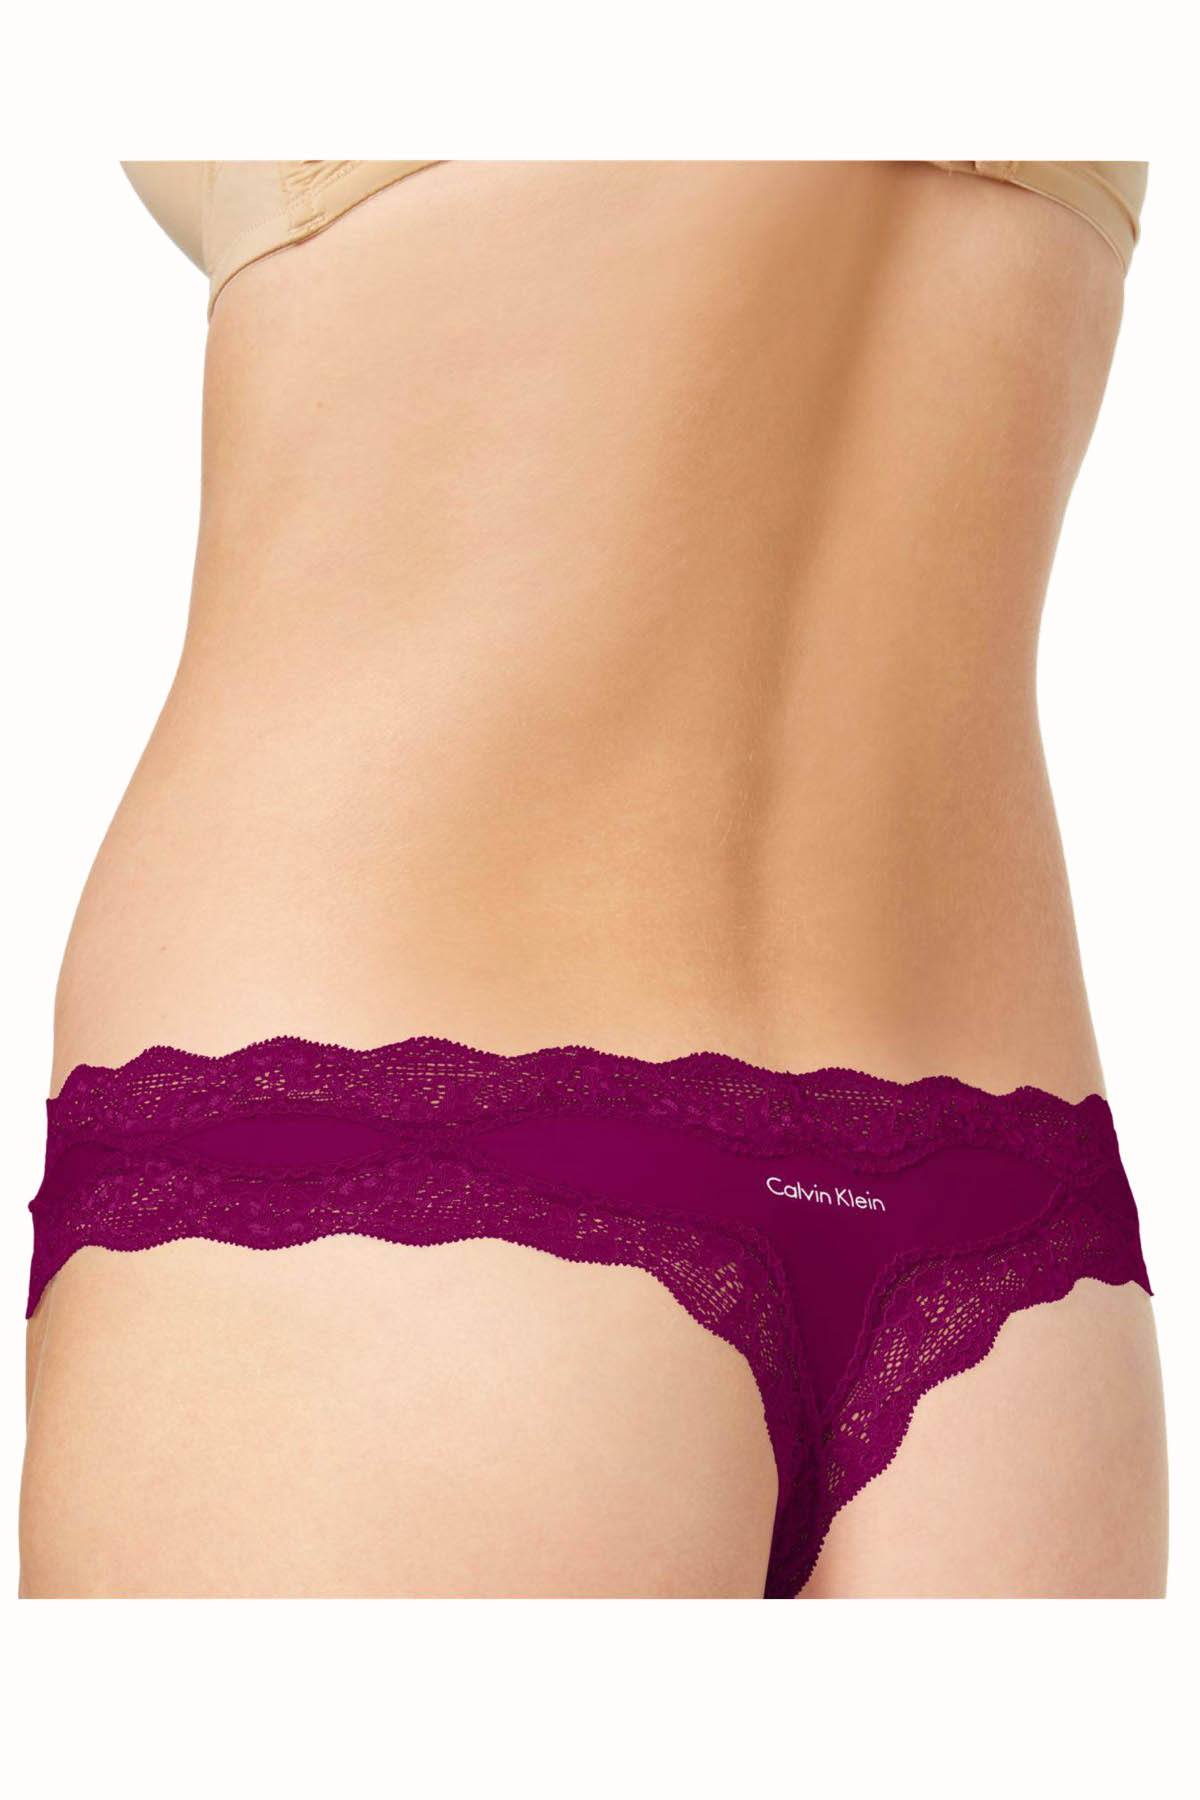 Calvin Klein Indulge-Plum Croquette Lace Thong